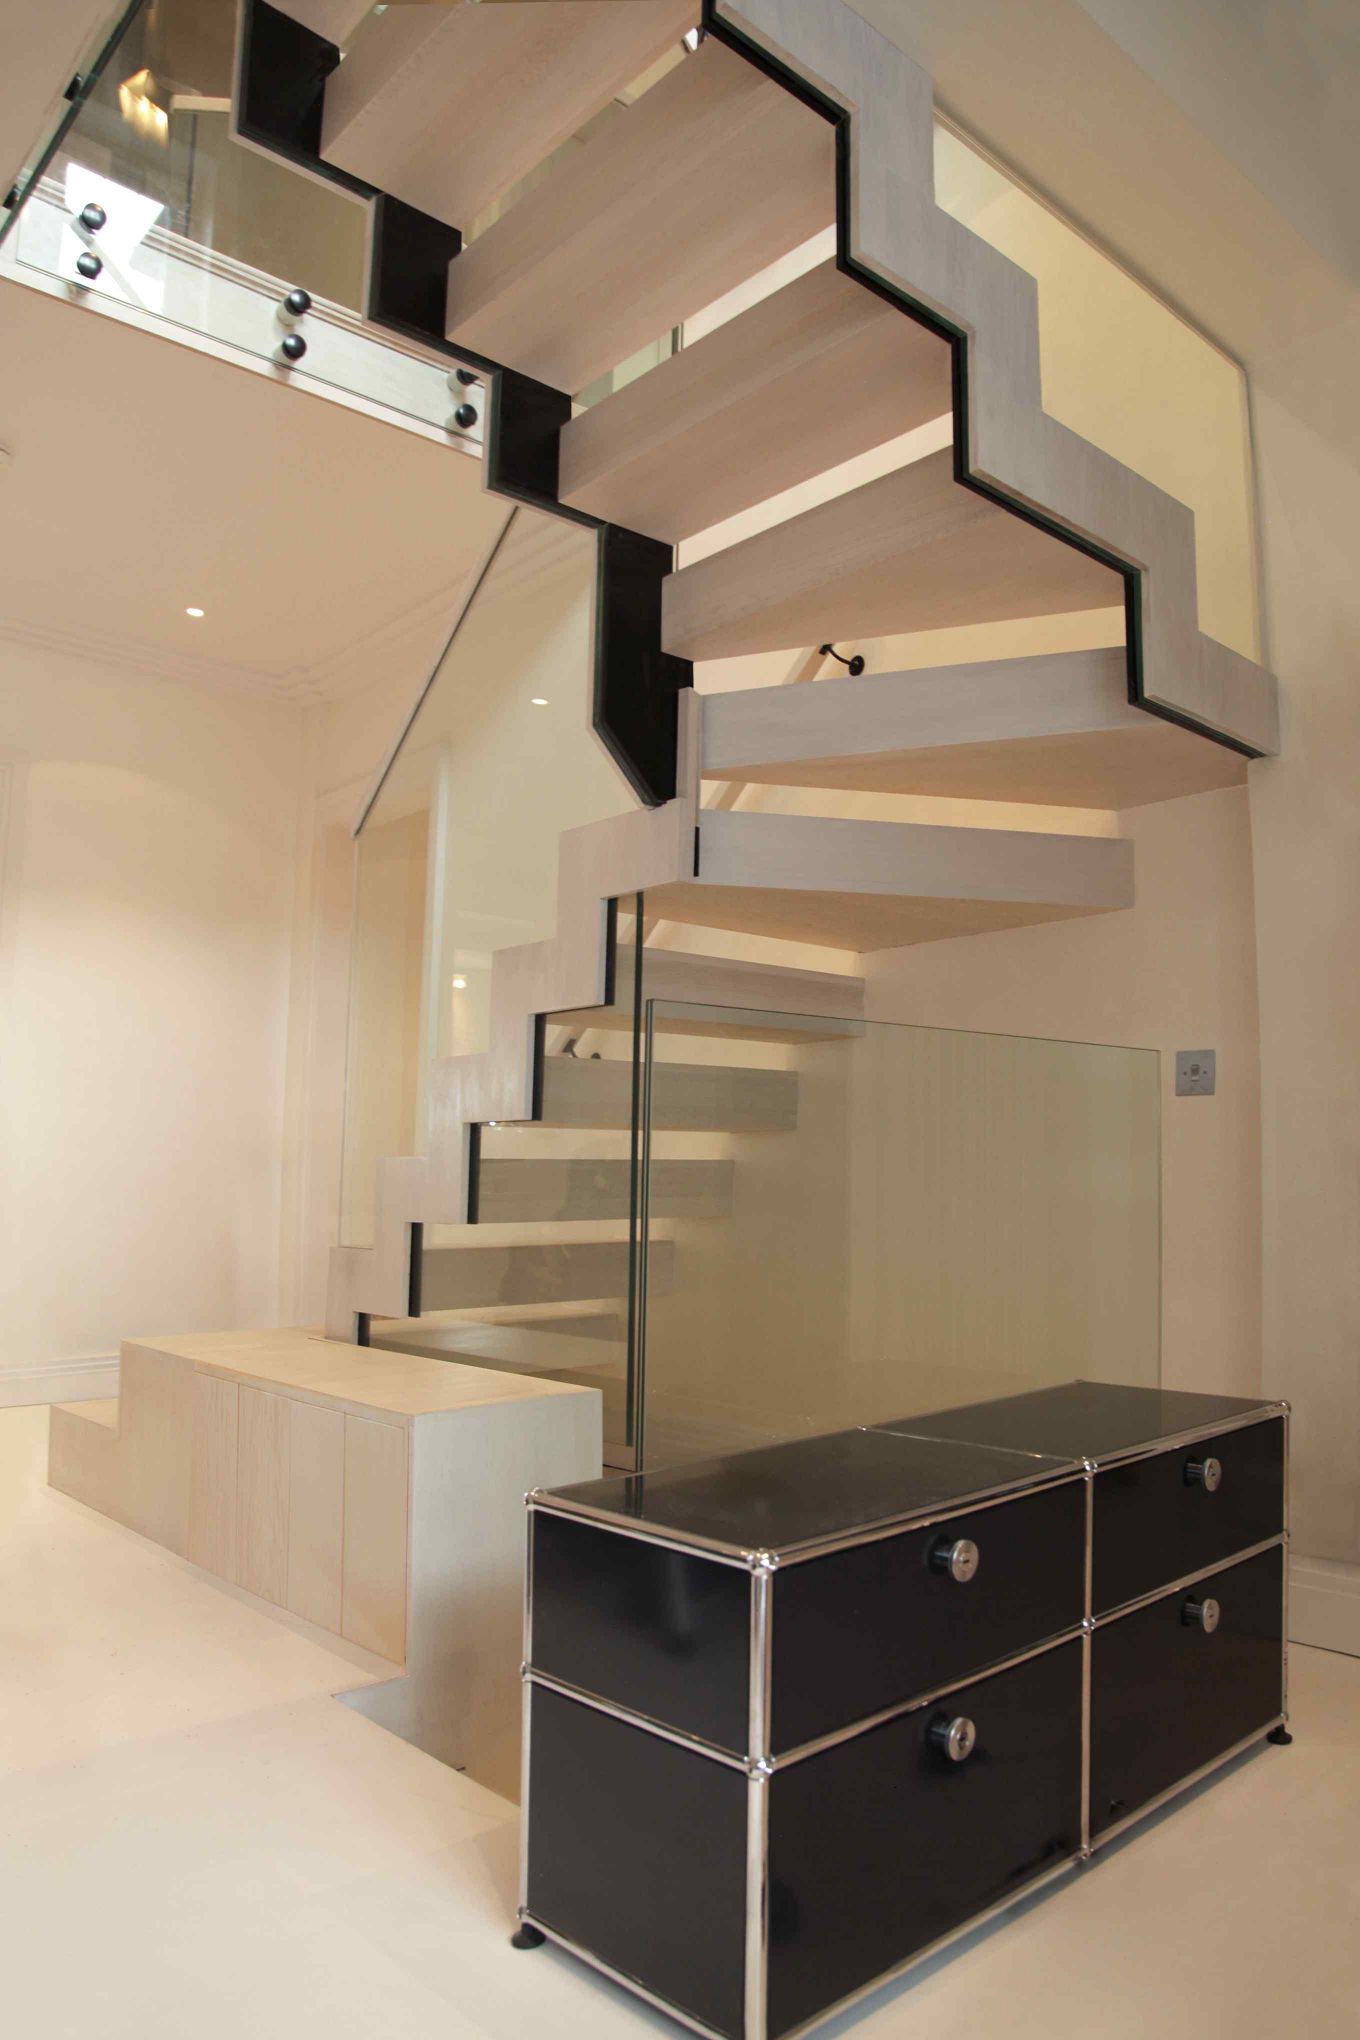 Bespoke ZIG-ZAG staircase with Glass balustrade